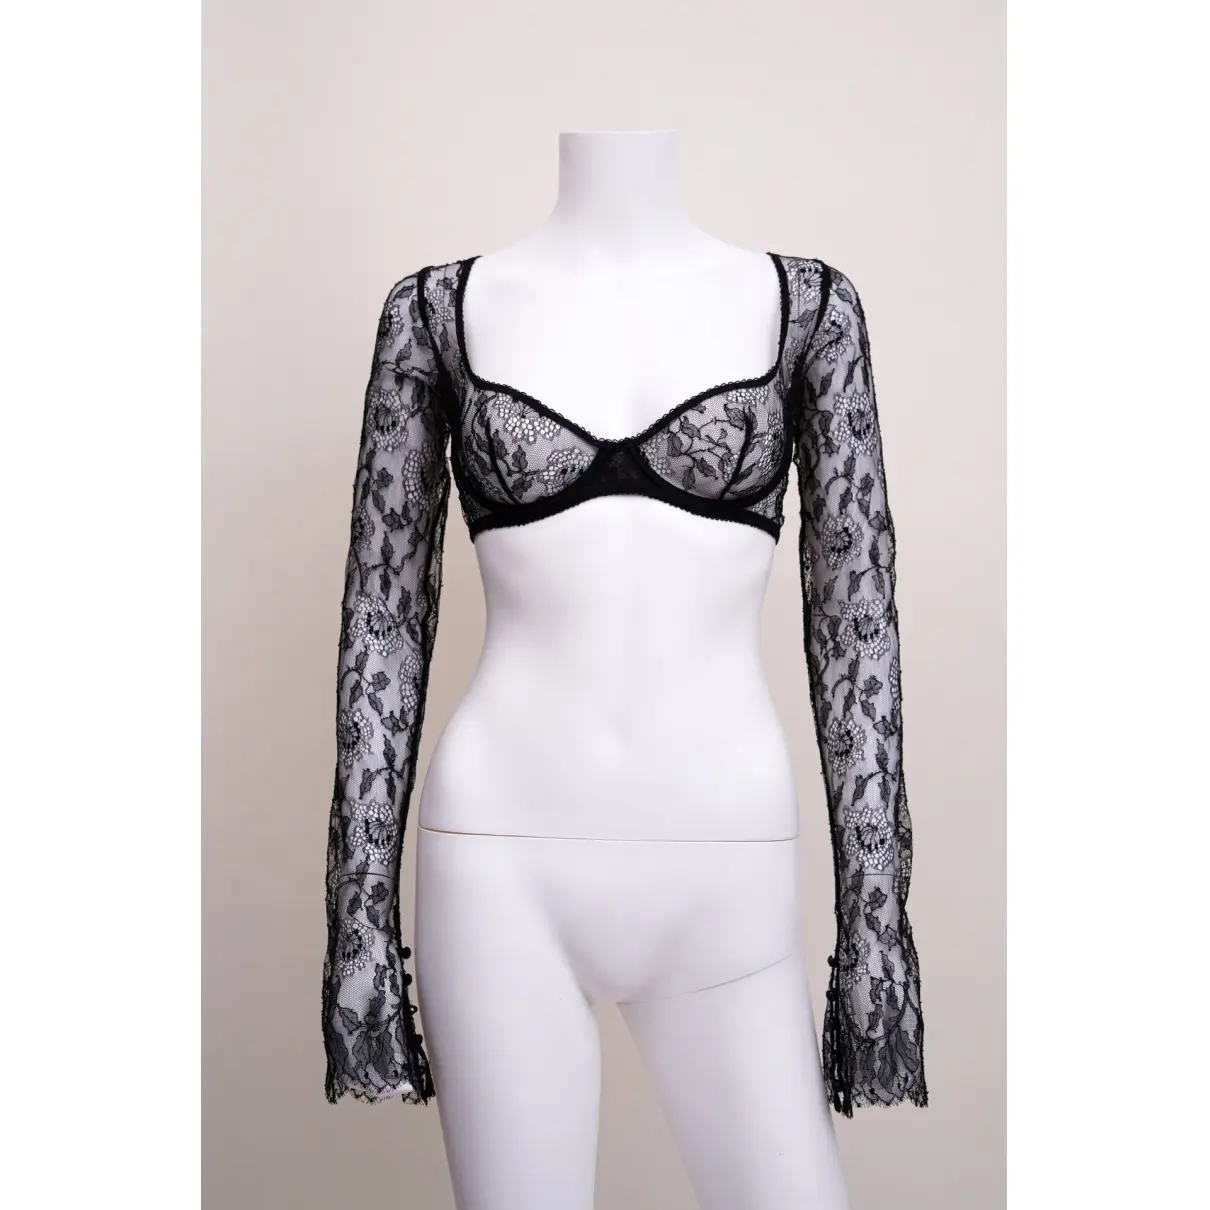 Buy Chanel Lace corset online